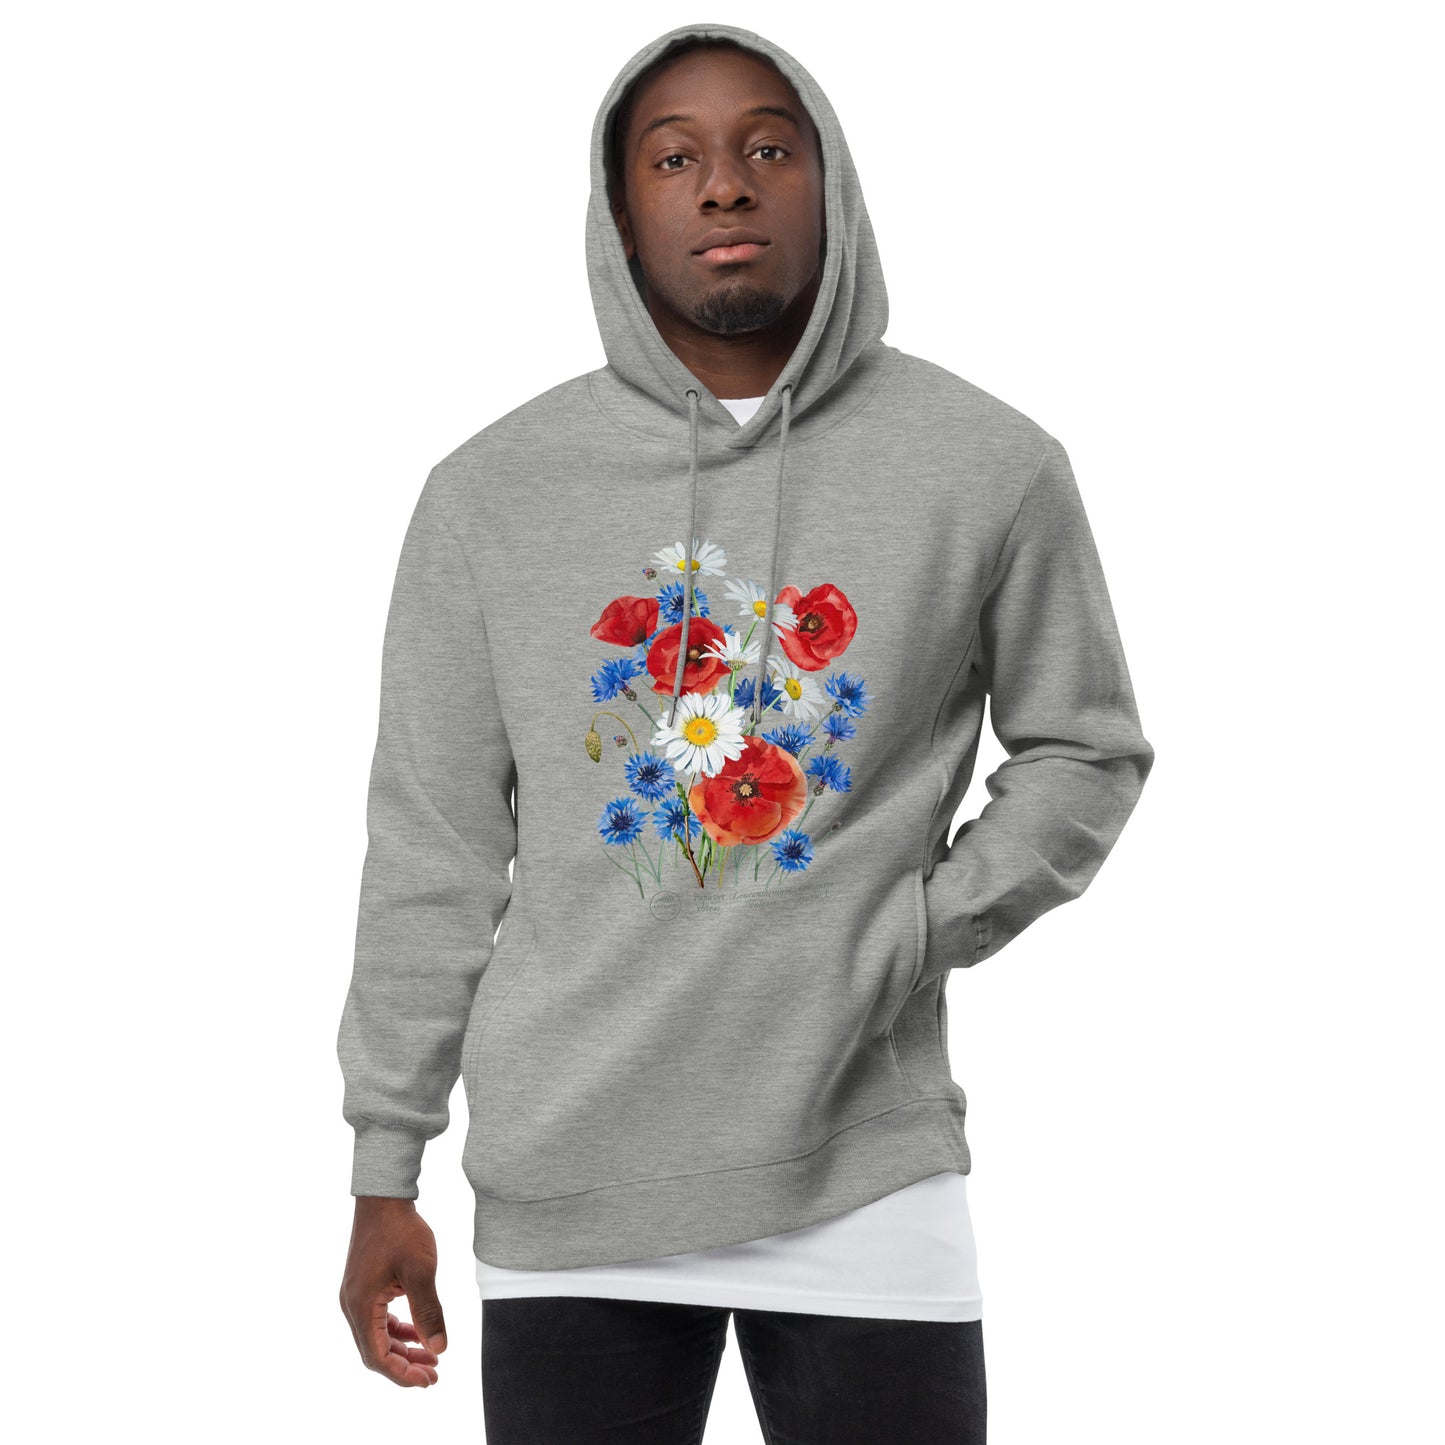 Unisex fashion hoodie - Field flowers